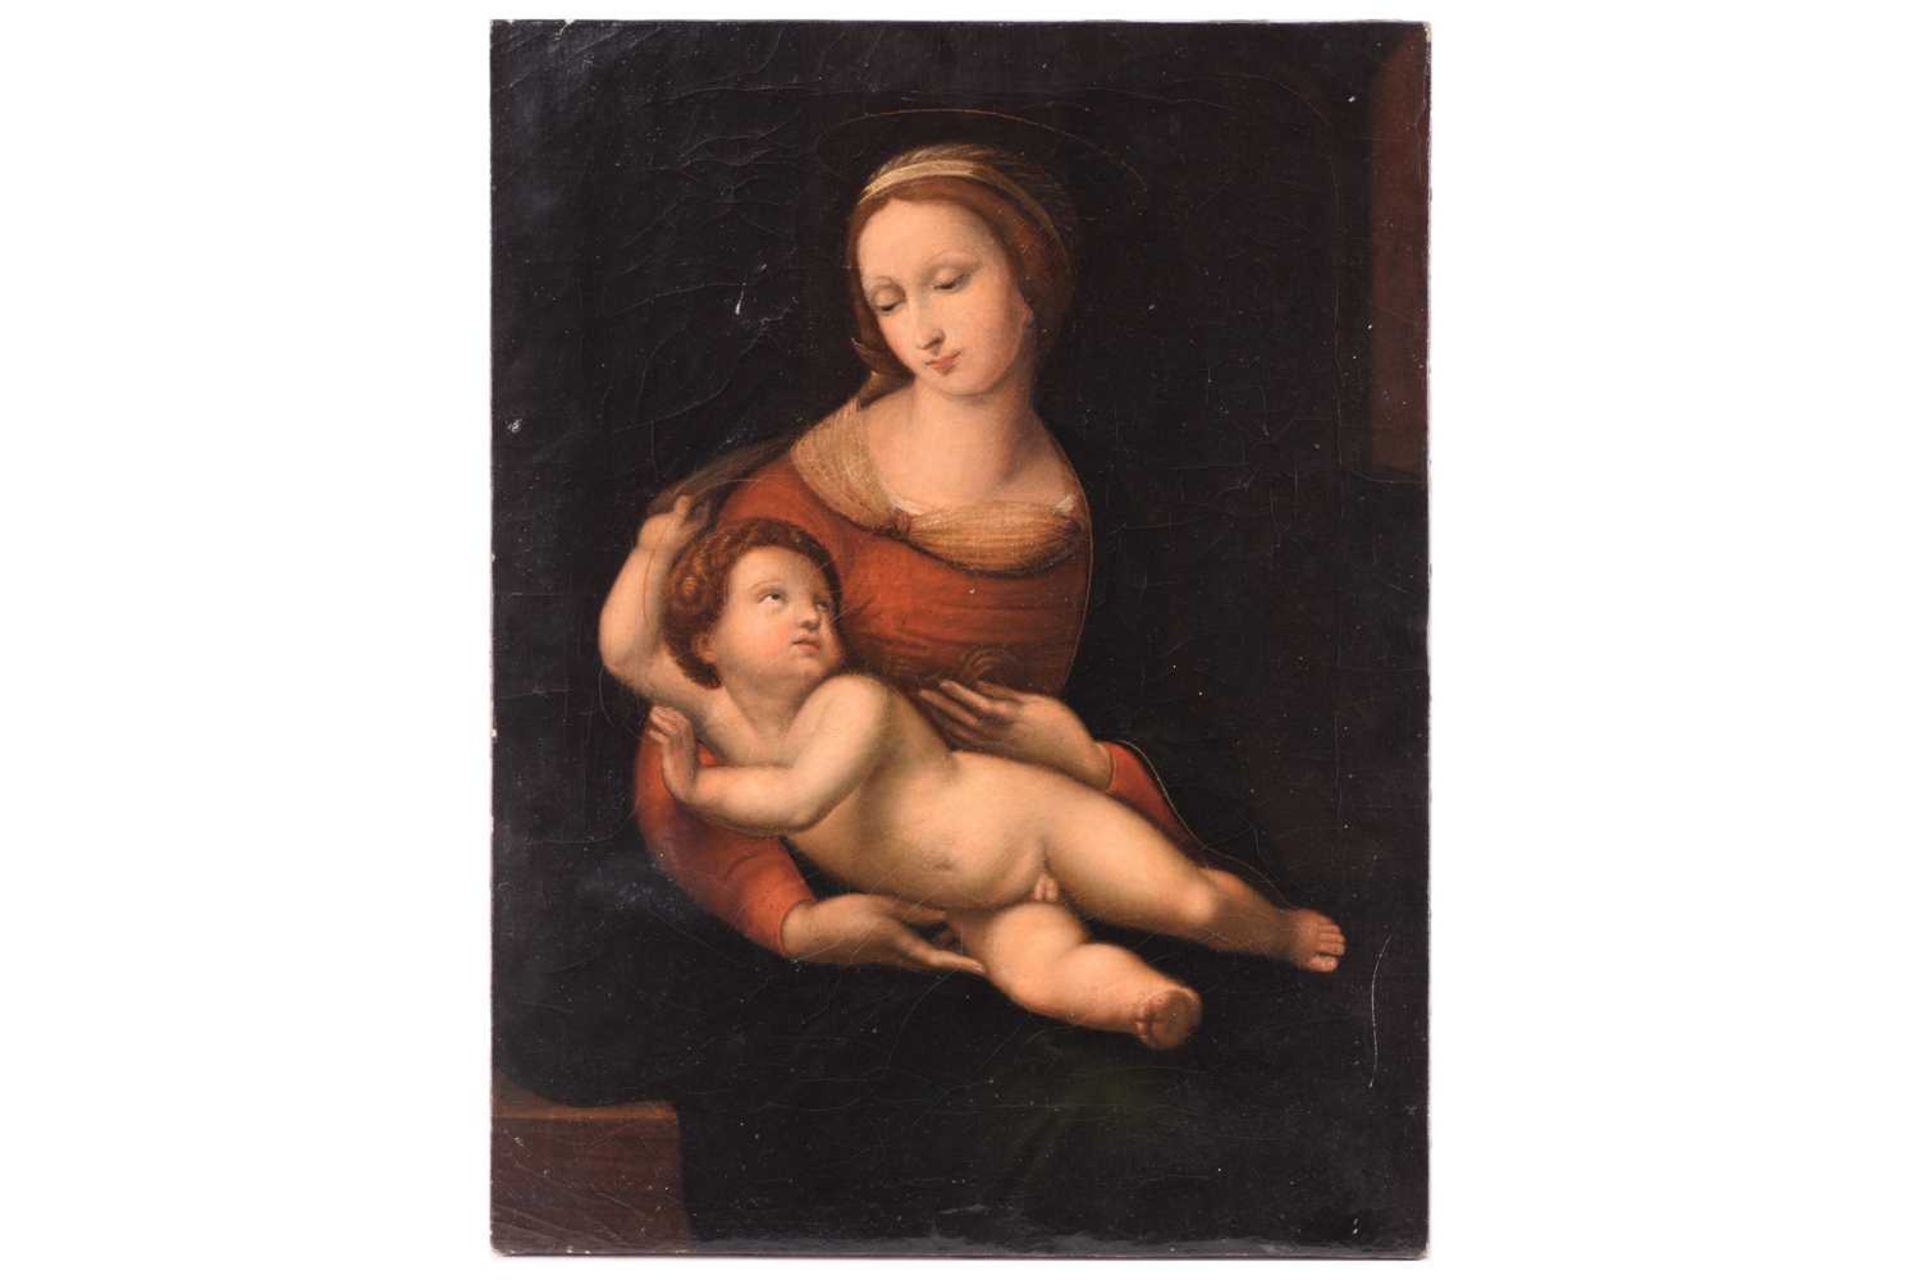 18th-century Italian school, after Raphael, 'The Bridgwater Madonna', unframed oil on canvas, 48